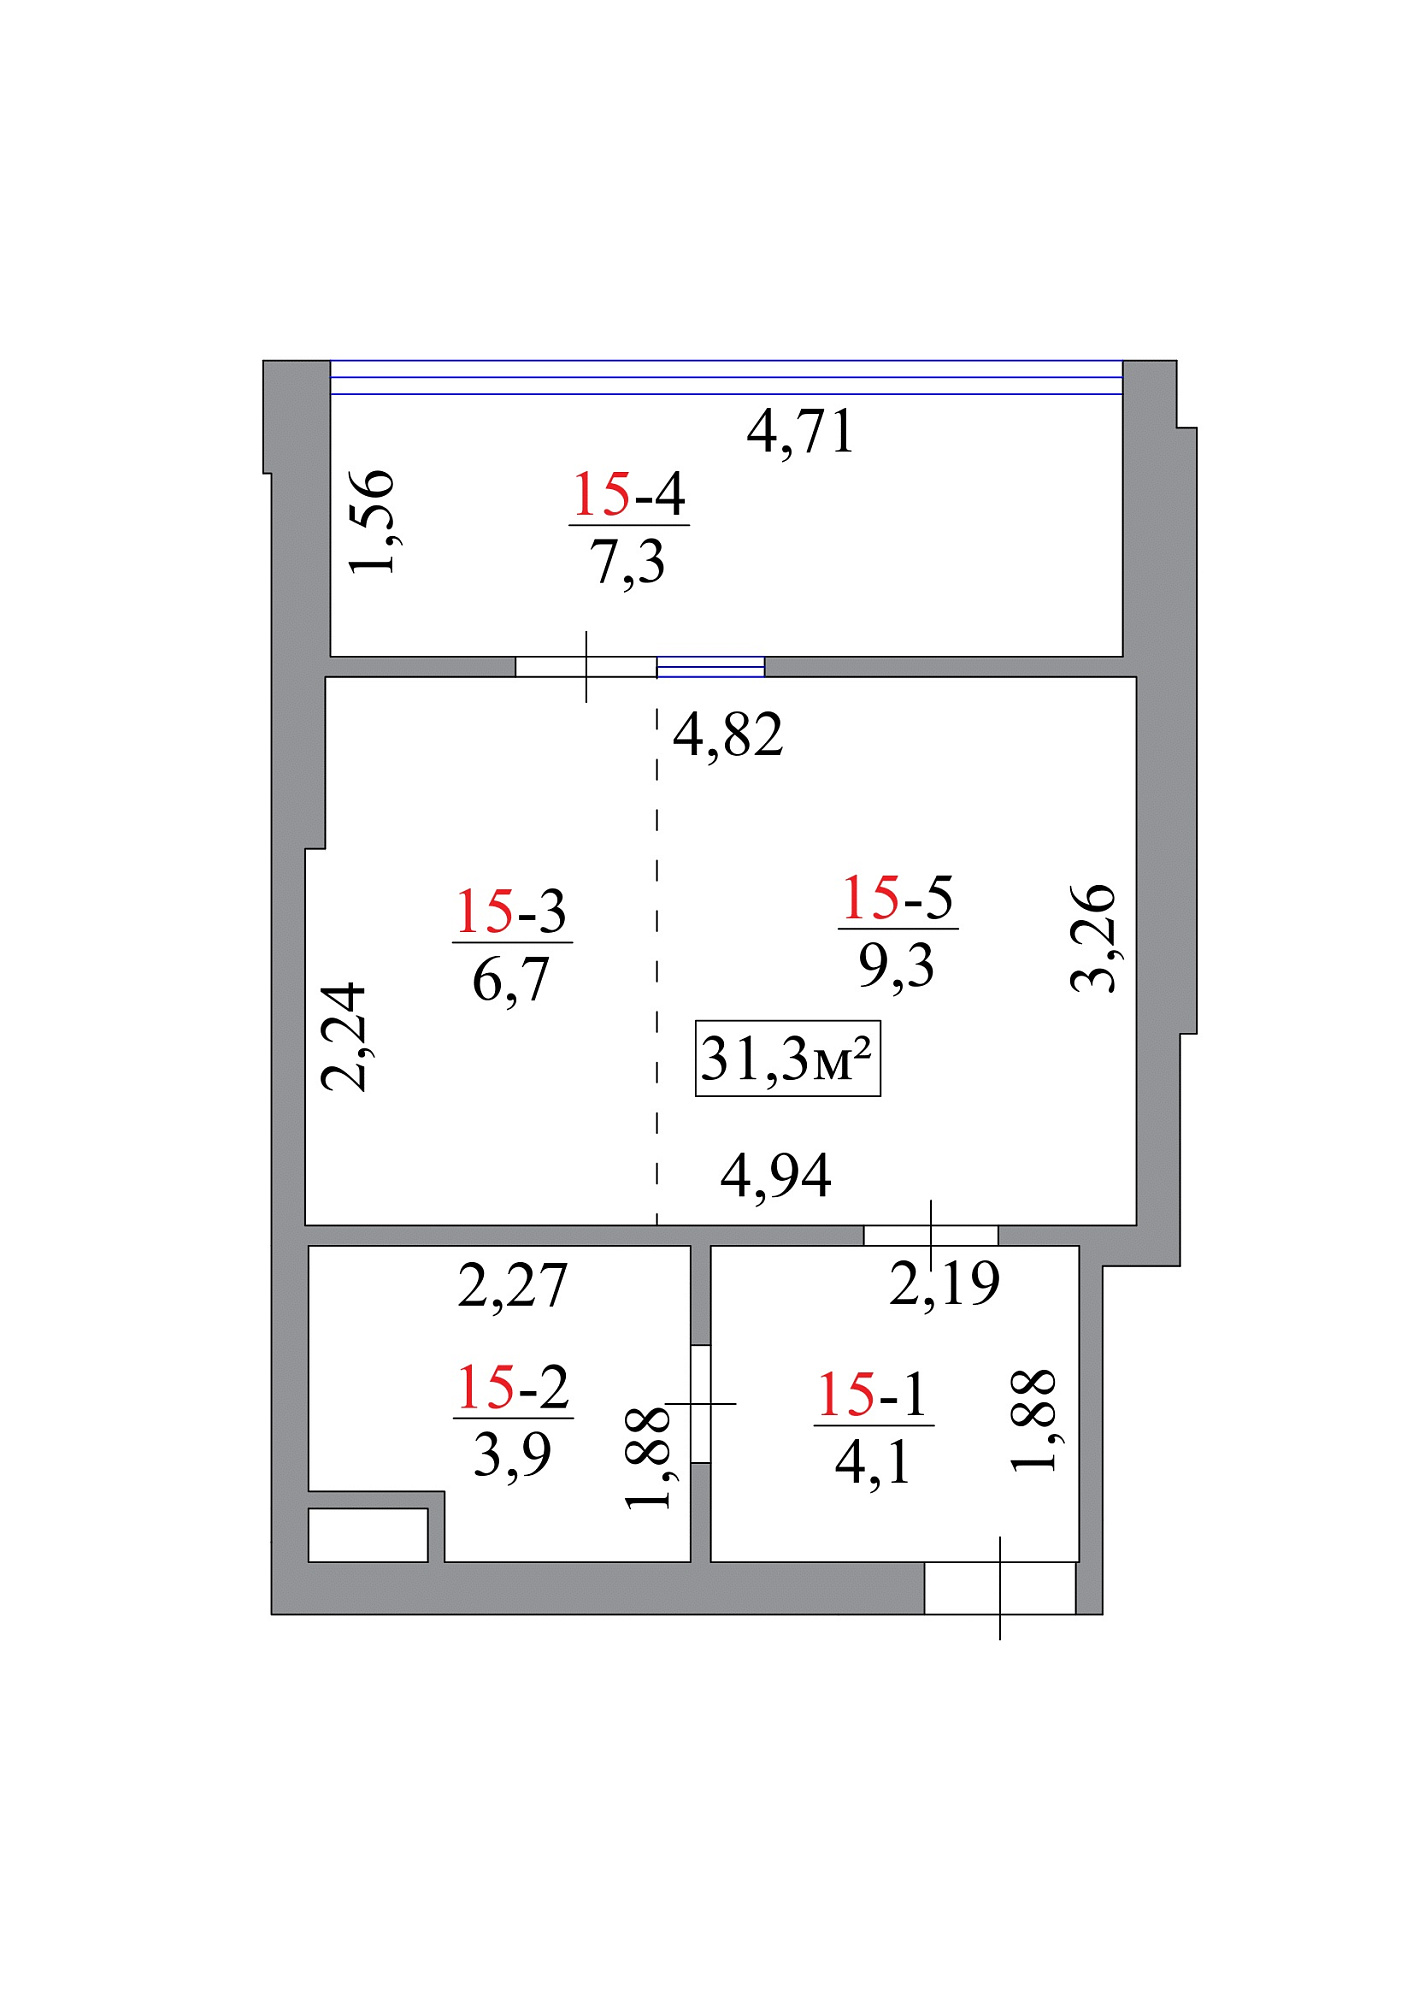 Planning Smart flats area 31.3m2, AB-07-02/00014.